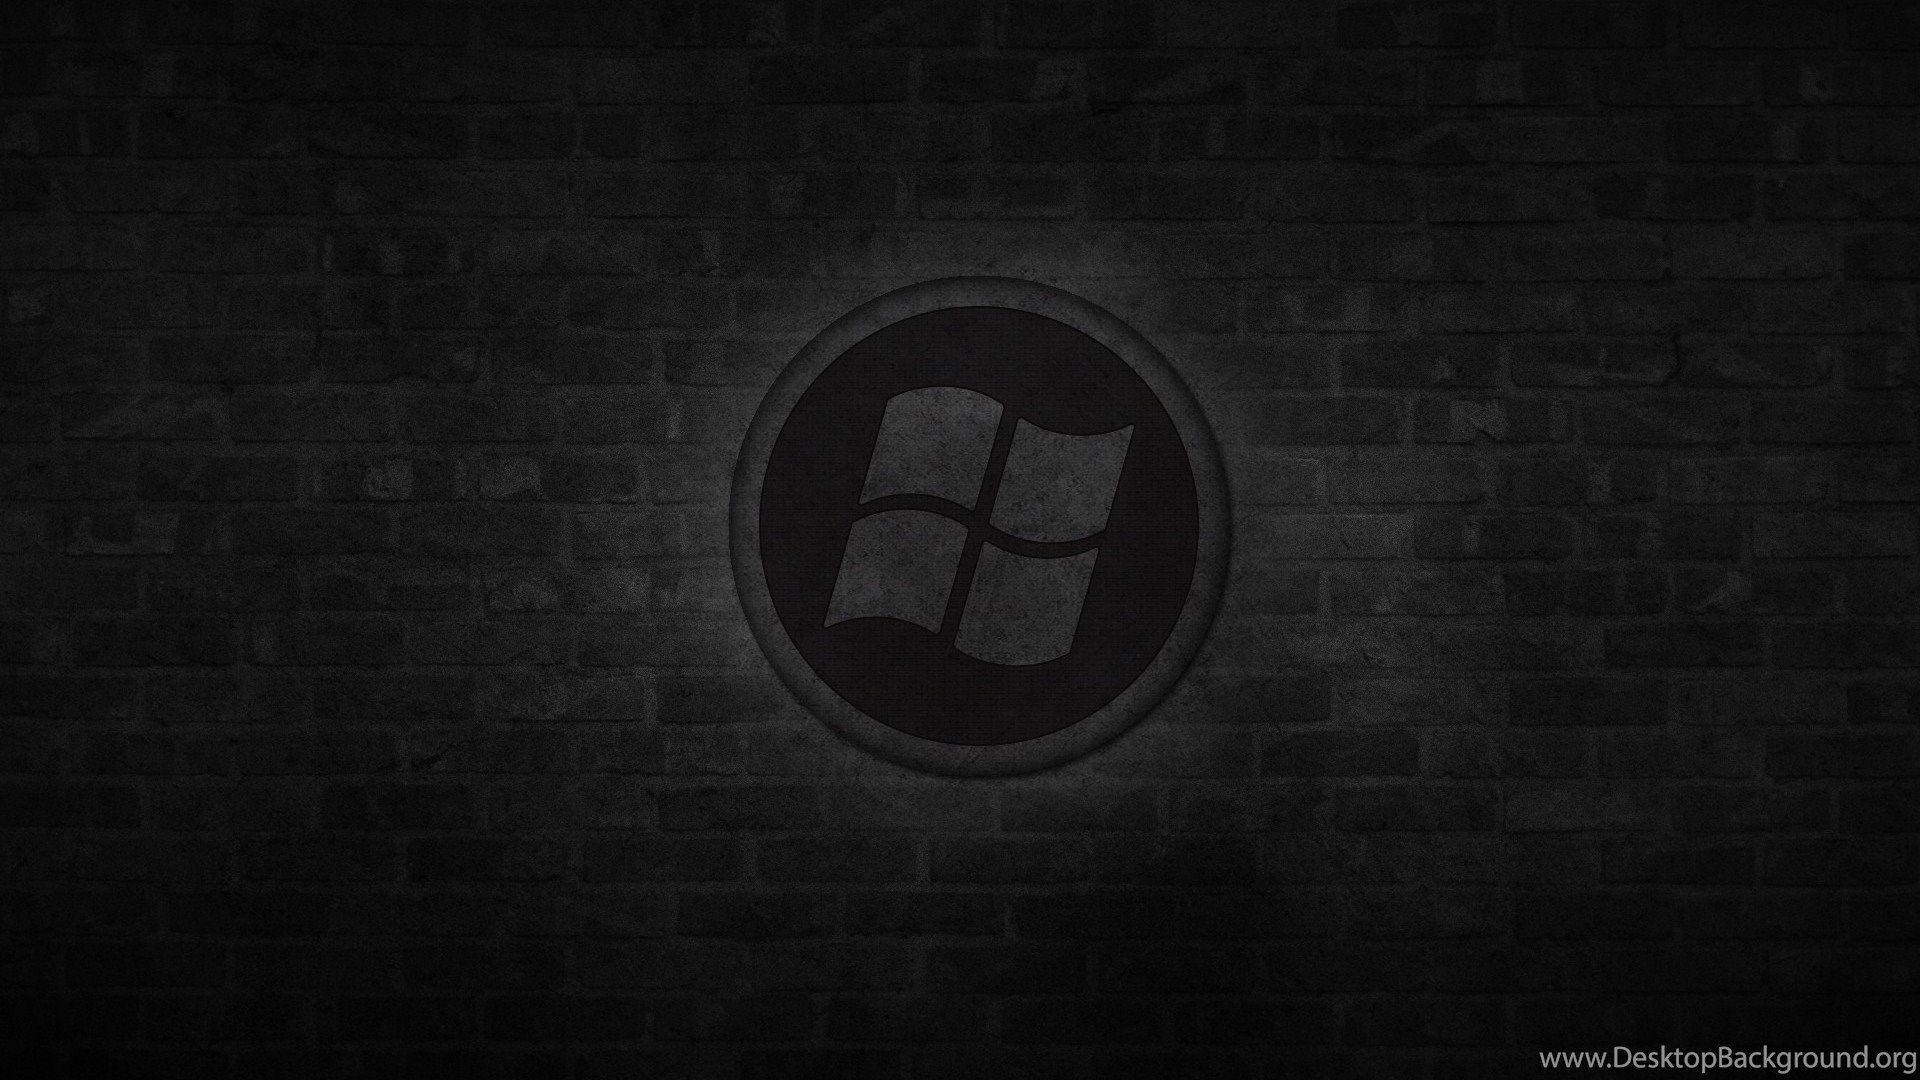 Dark Windows Logo - Windows: Dark Windows Logo Tech Hi Free Wallpaper For HD 16:9